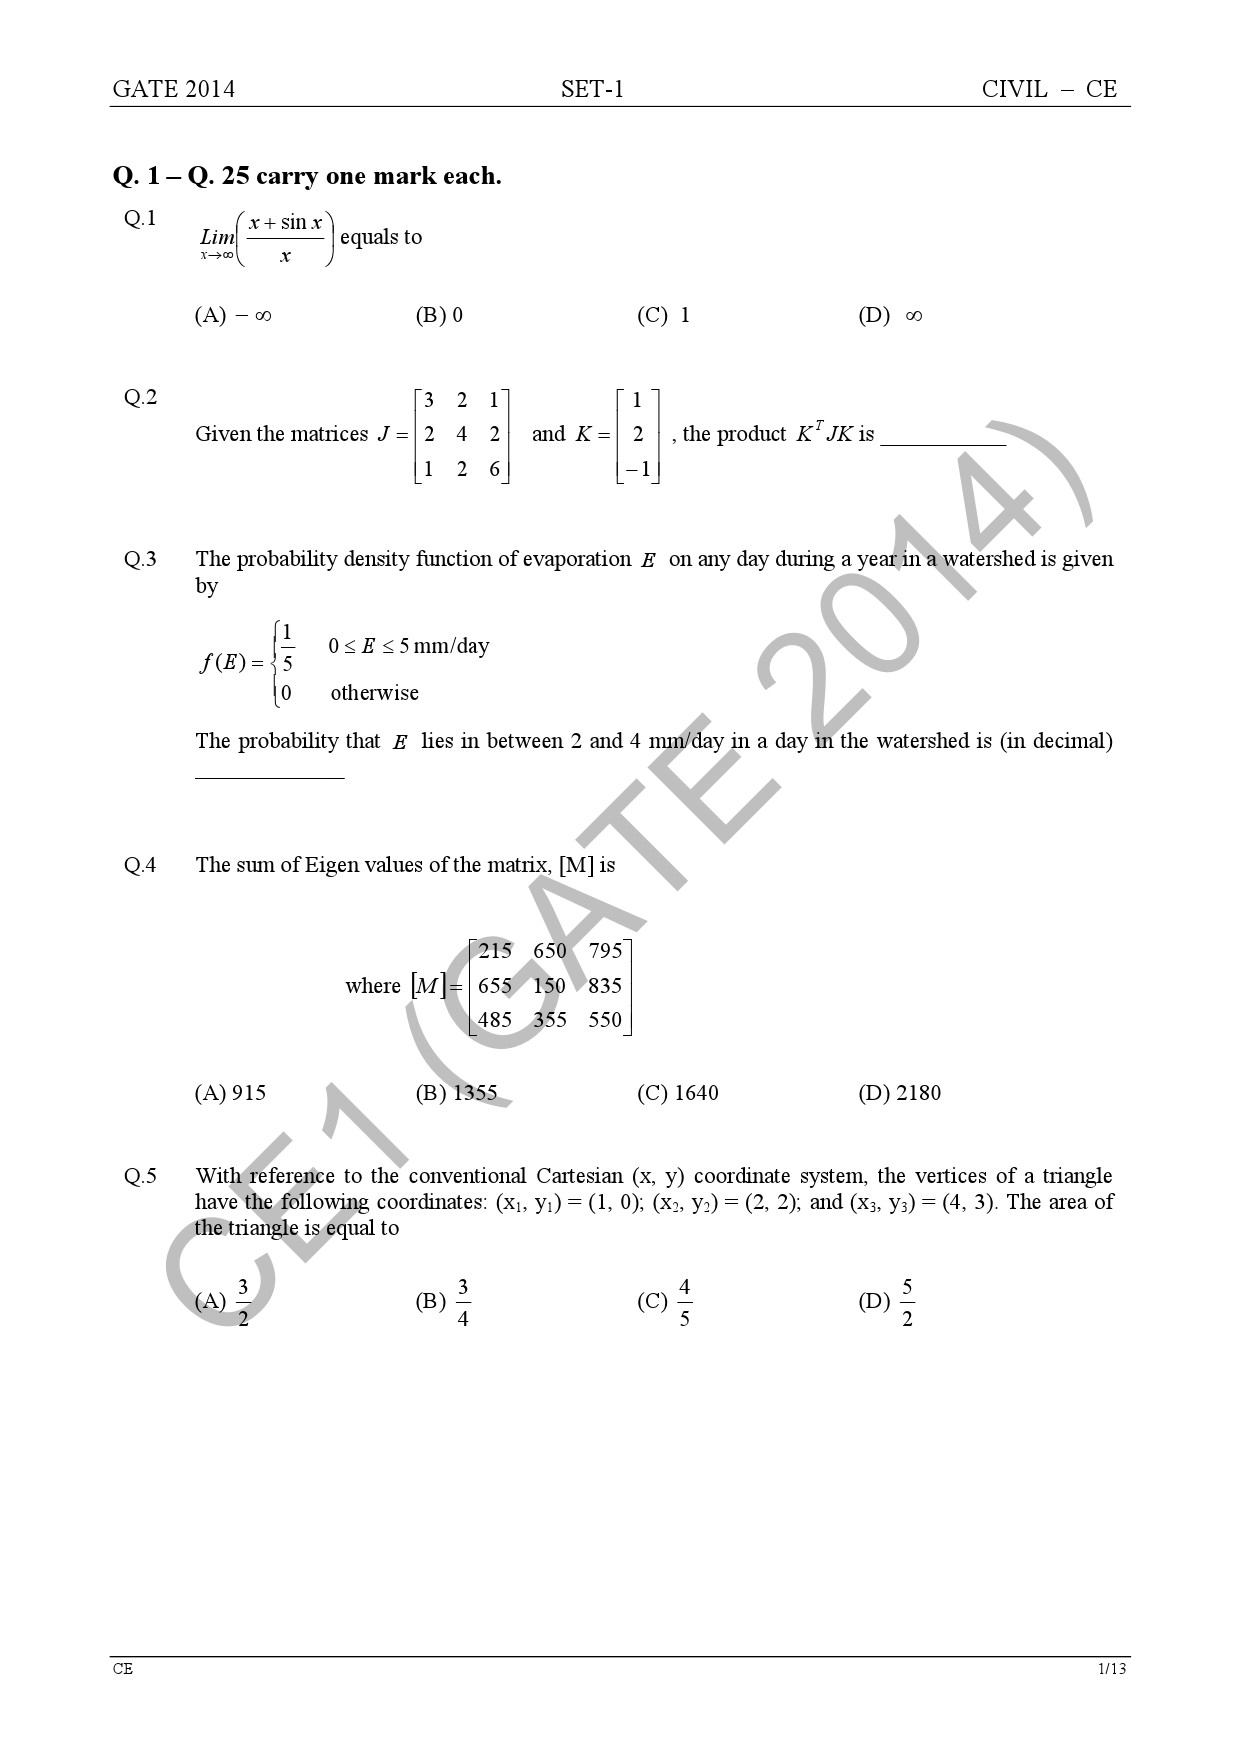 GATE Exam Question Paper 2014 Civil Engineering Set 1 7